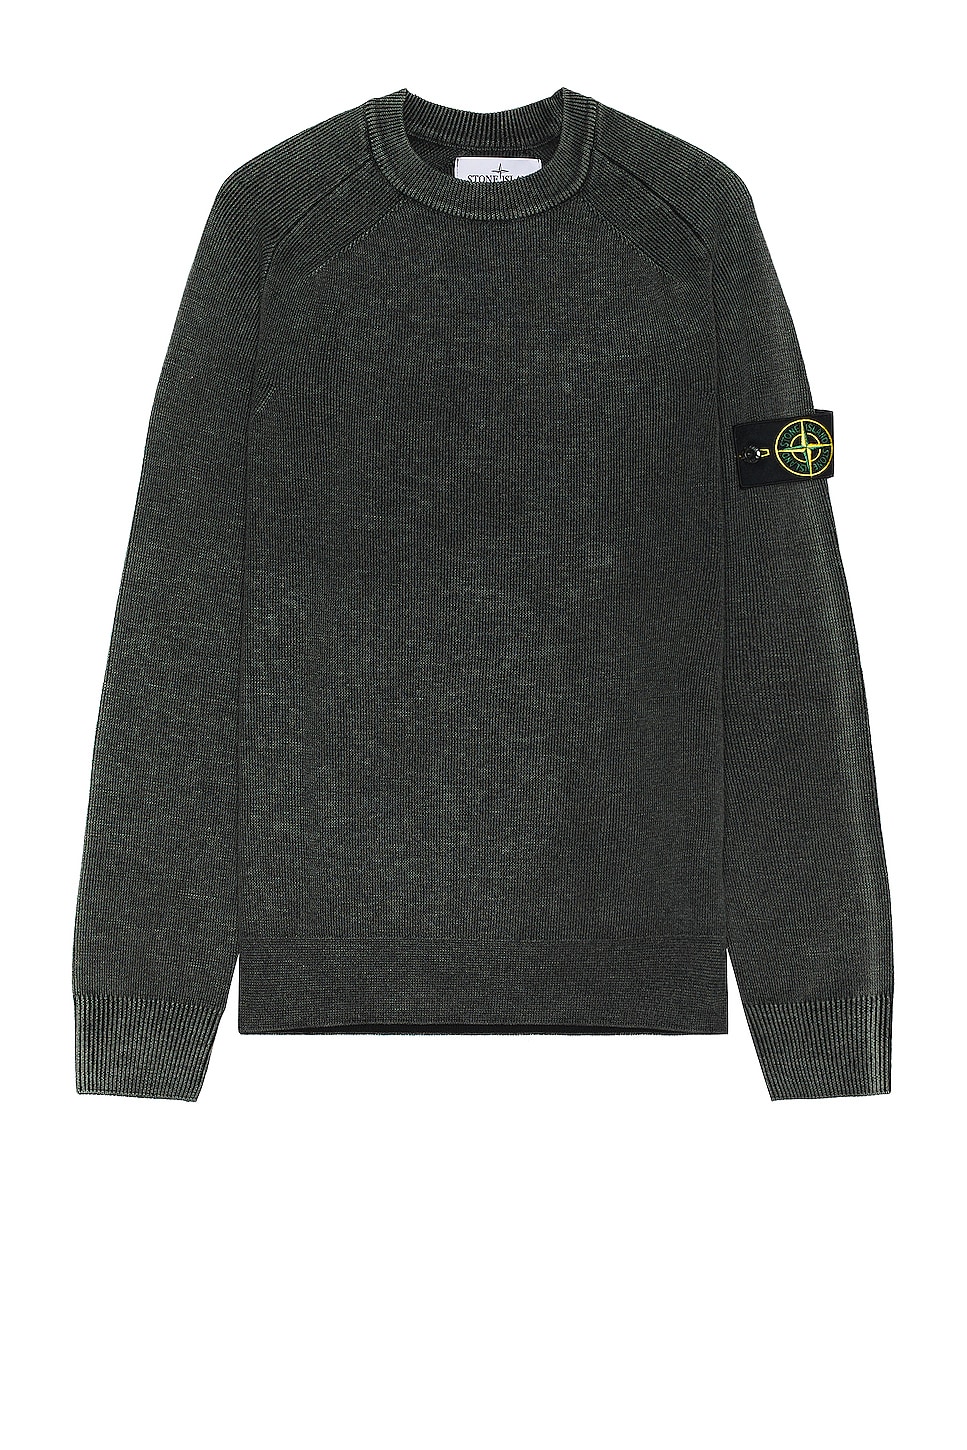 Image 1 of Stone Island Sweater in Black